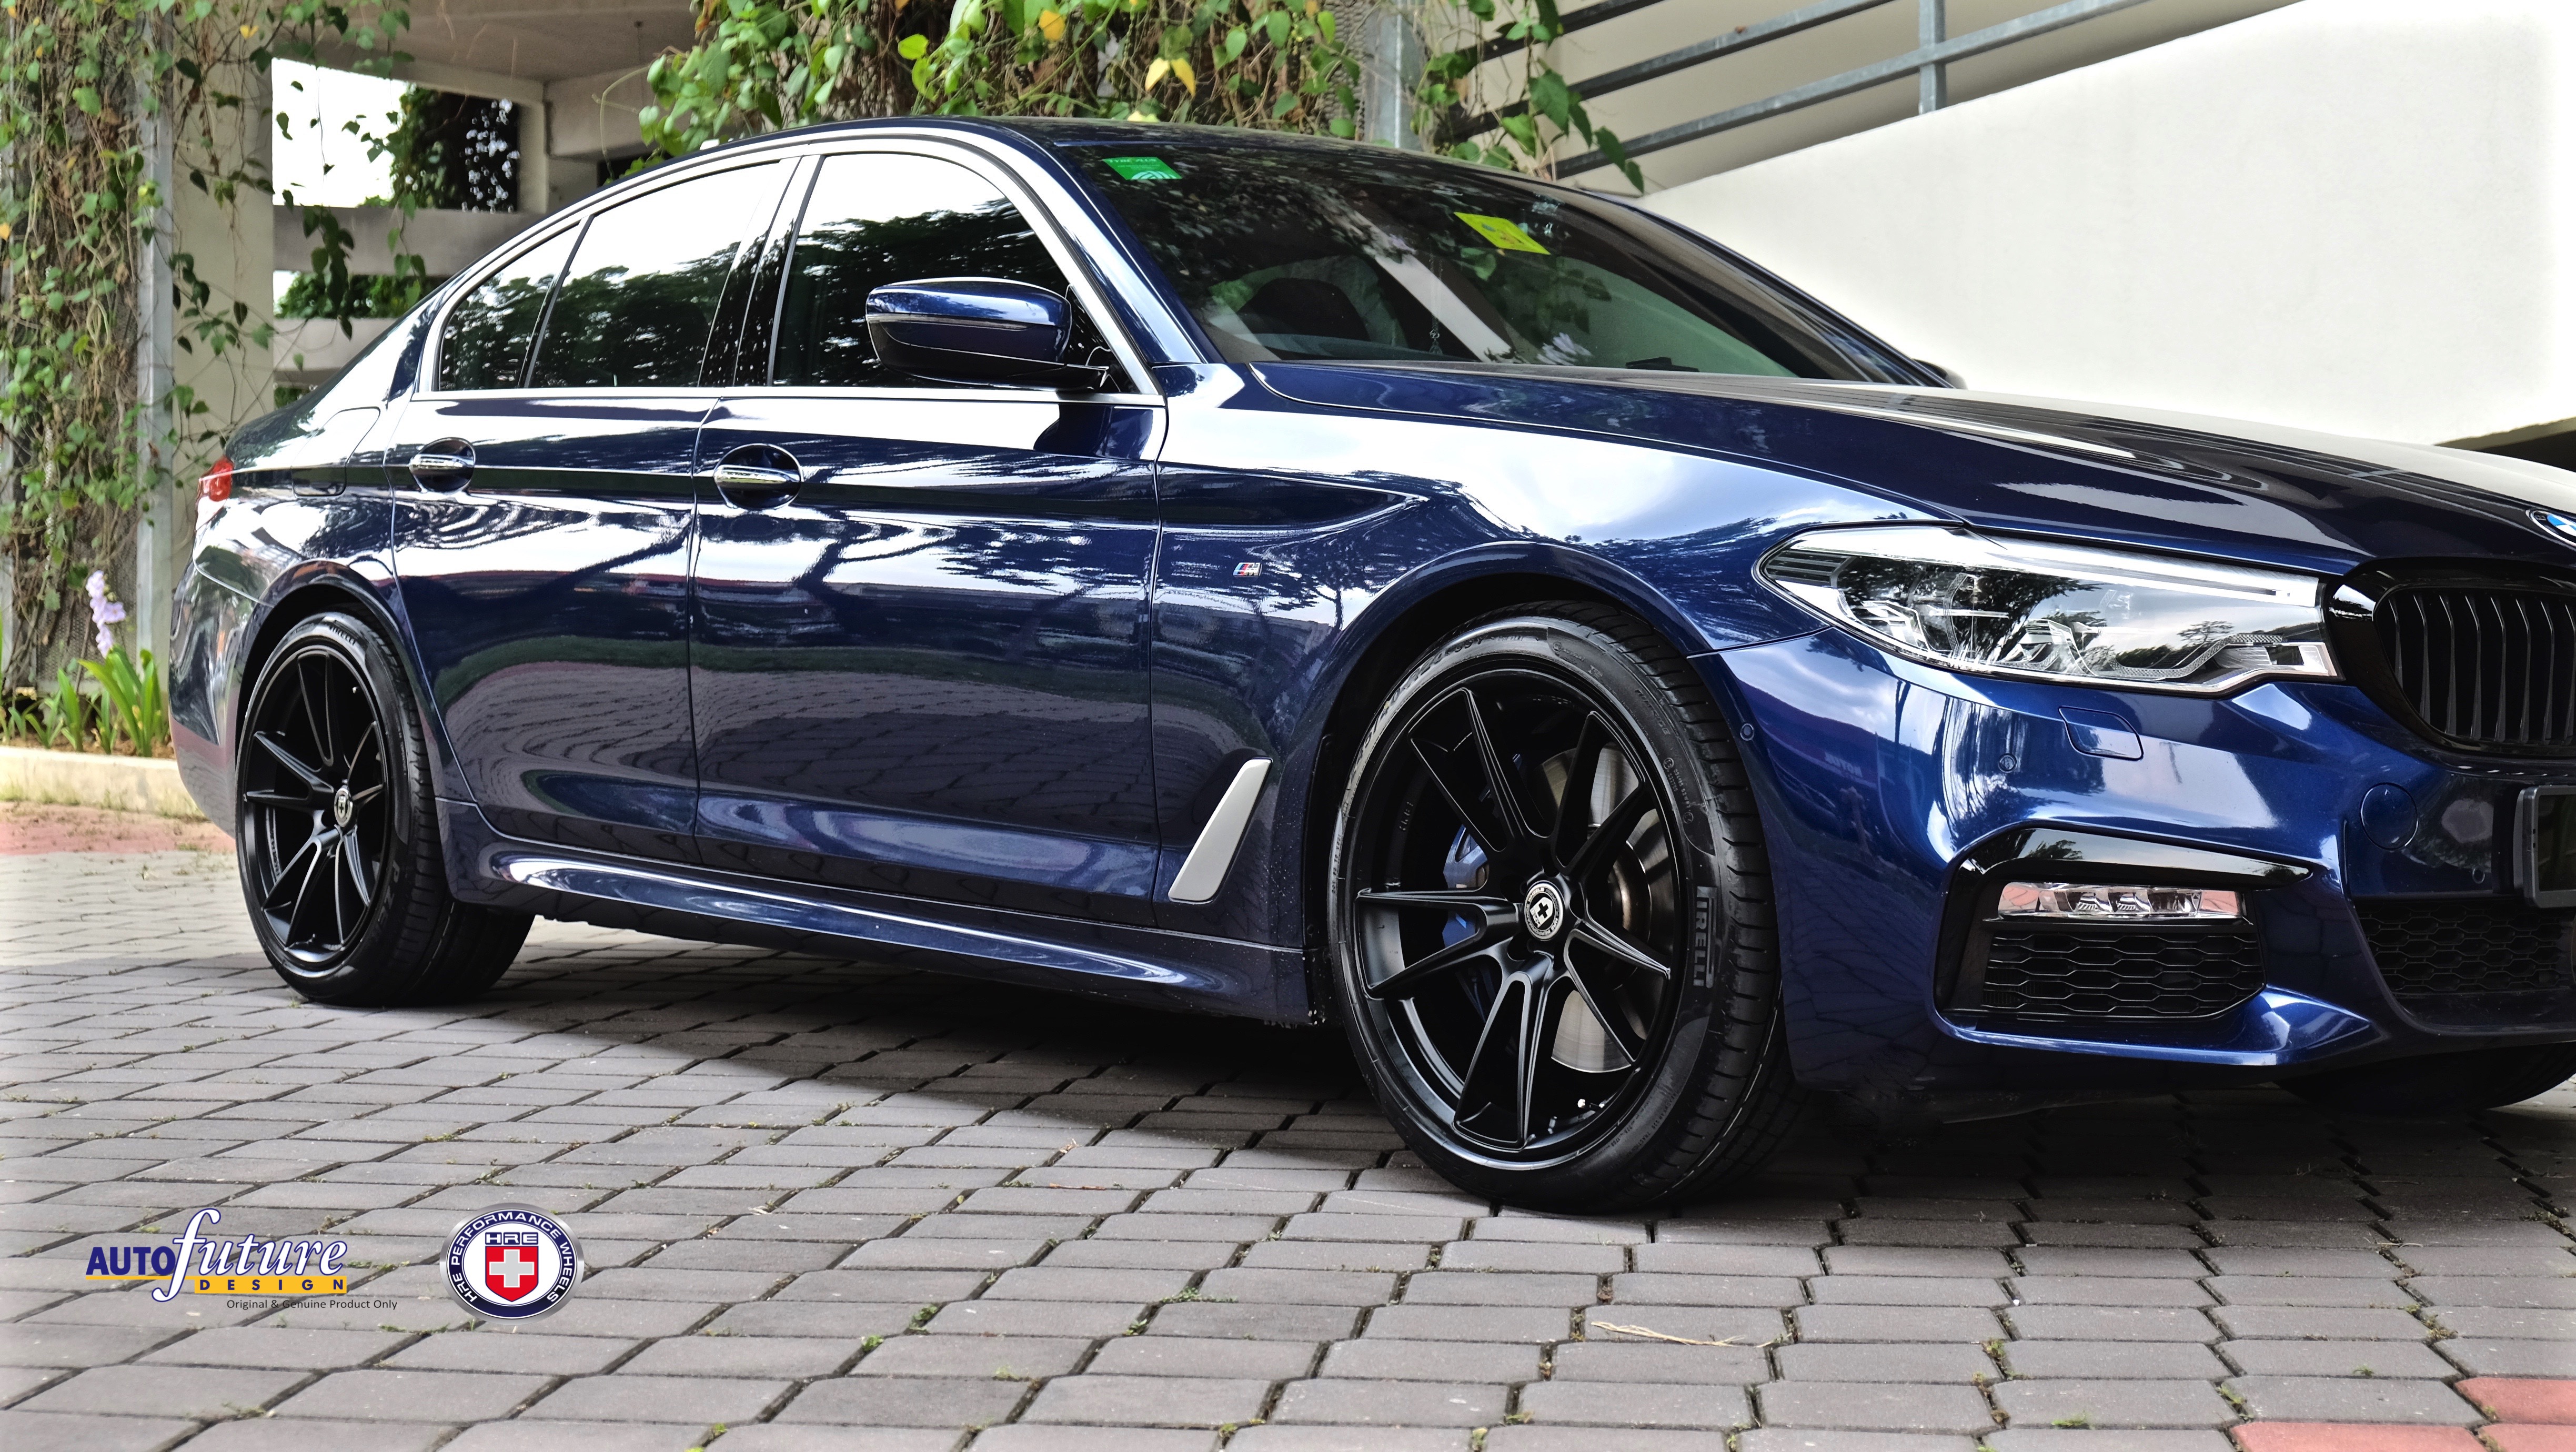 BMW 5 Series iPerformance (G30) best model